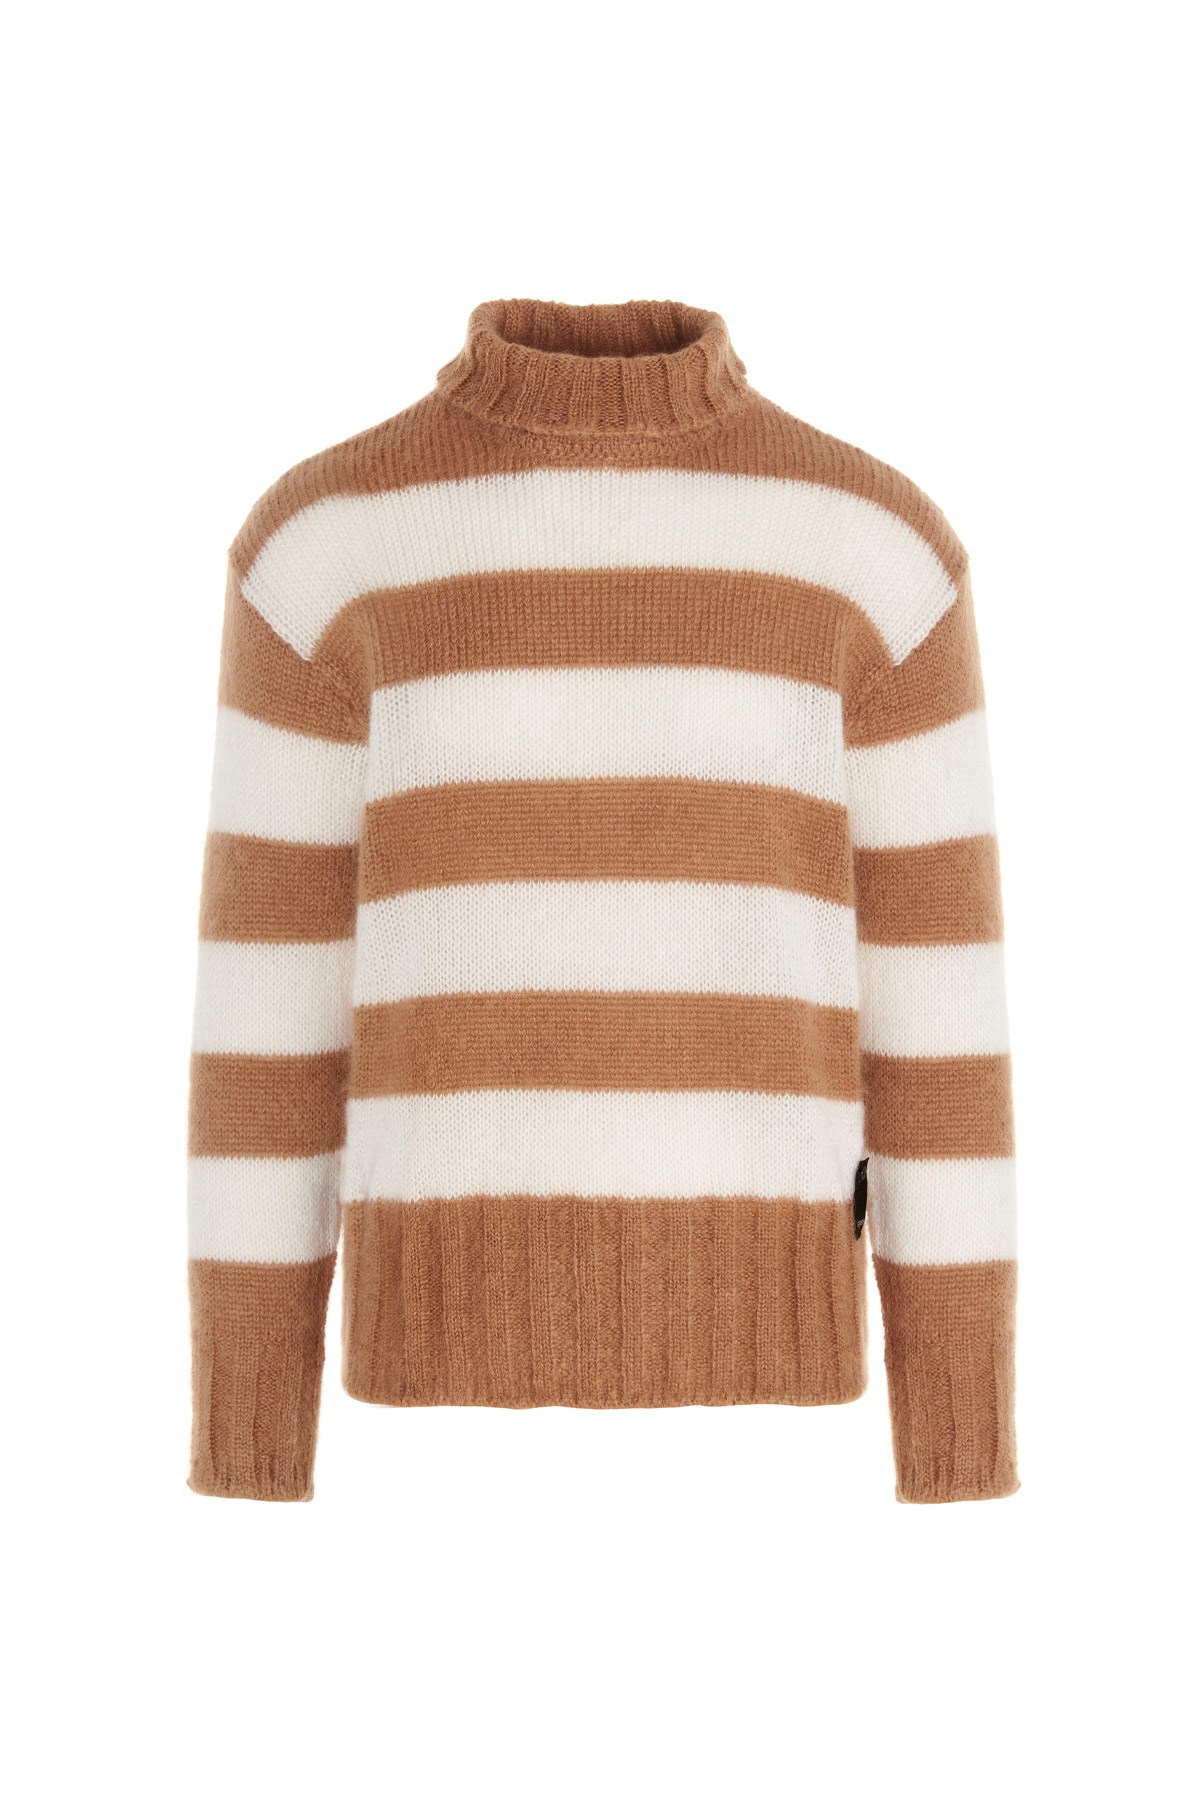 FENDI Striped Sweater